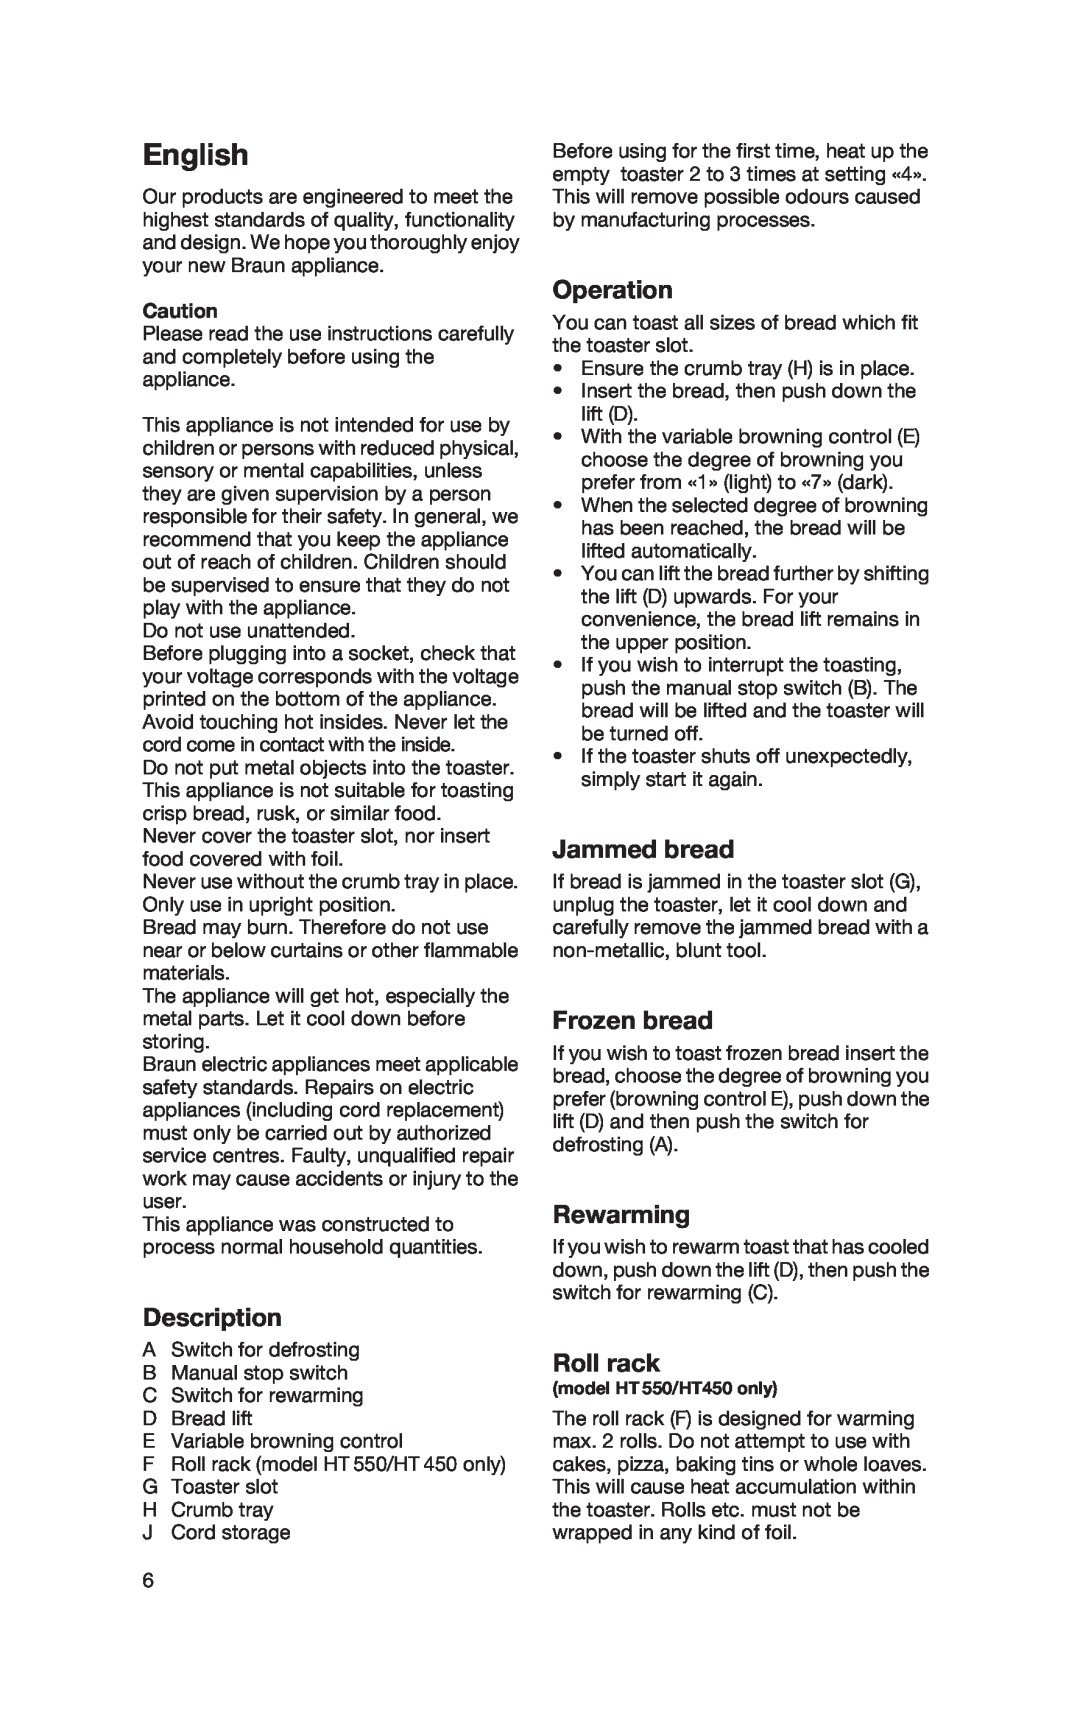 Braun HT 550 manual Description, Operation, Jammed bread, Frozen bread, Rewarming, Roll rack, English 